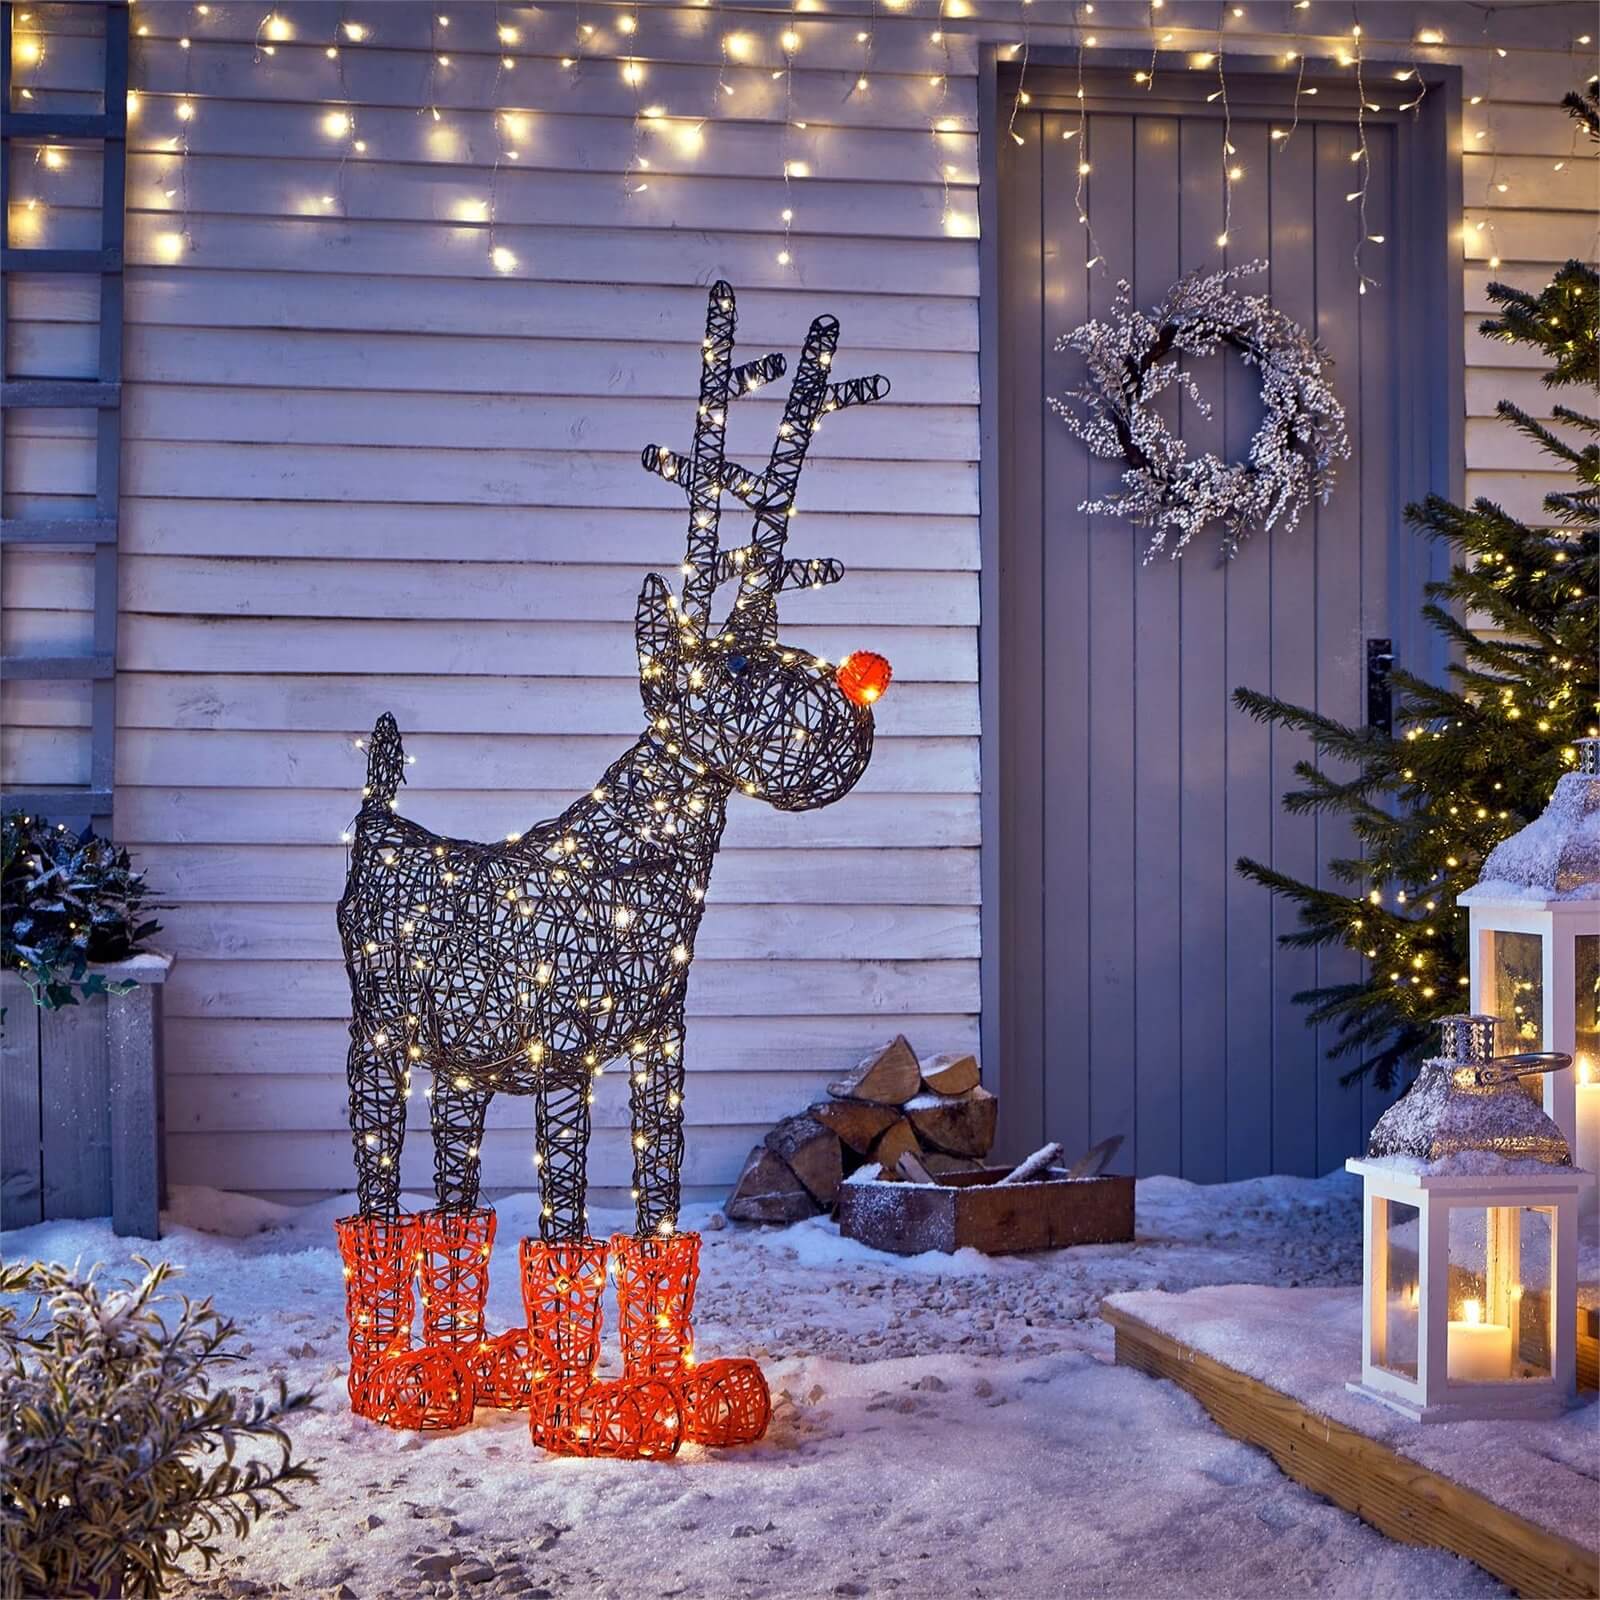 Rattan Effect LED Rudolph Warm White 3D Outdoor Christmas Light Decoration - 122cm